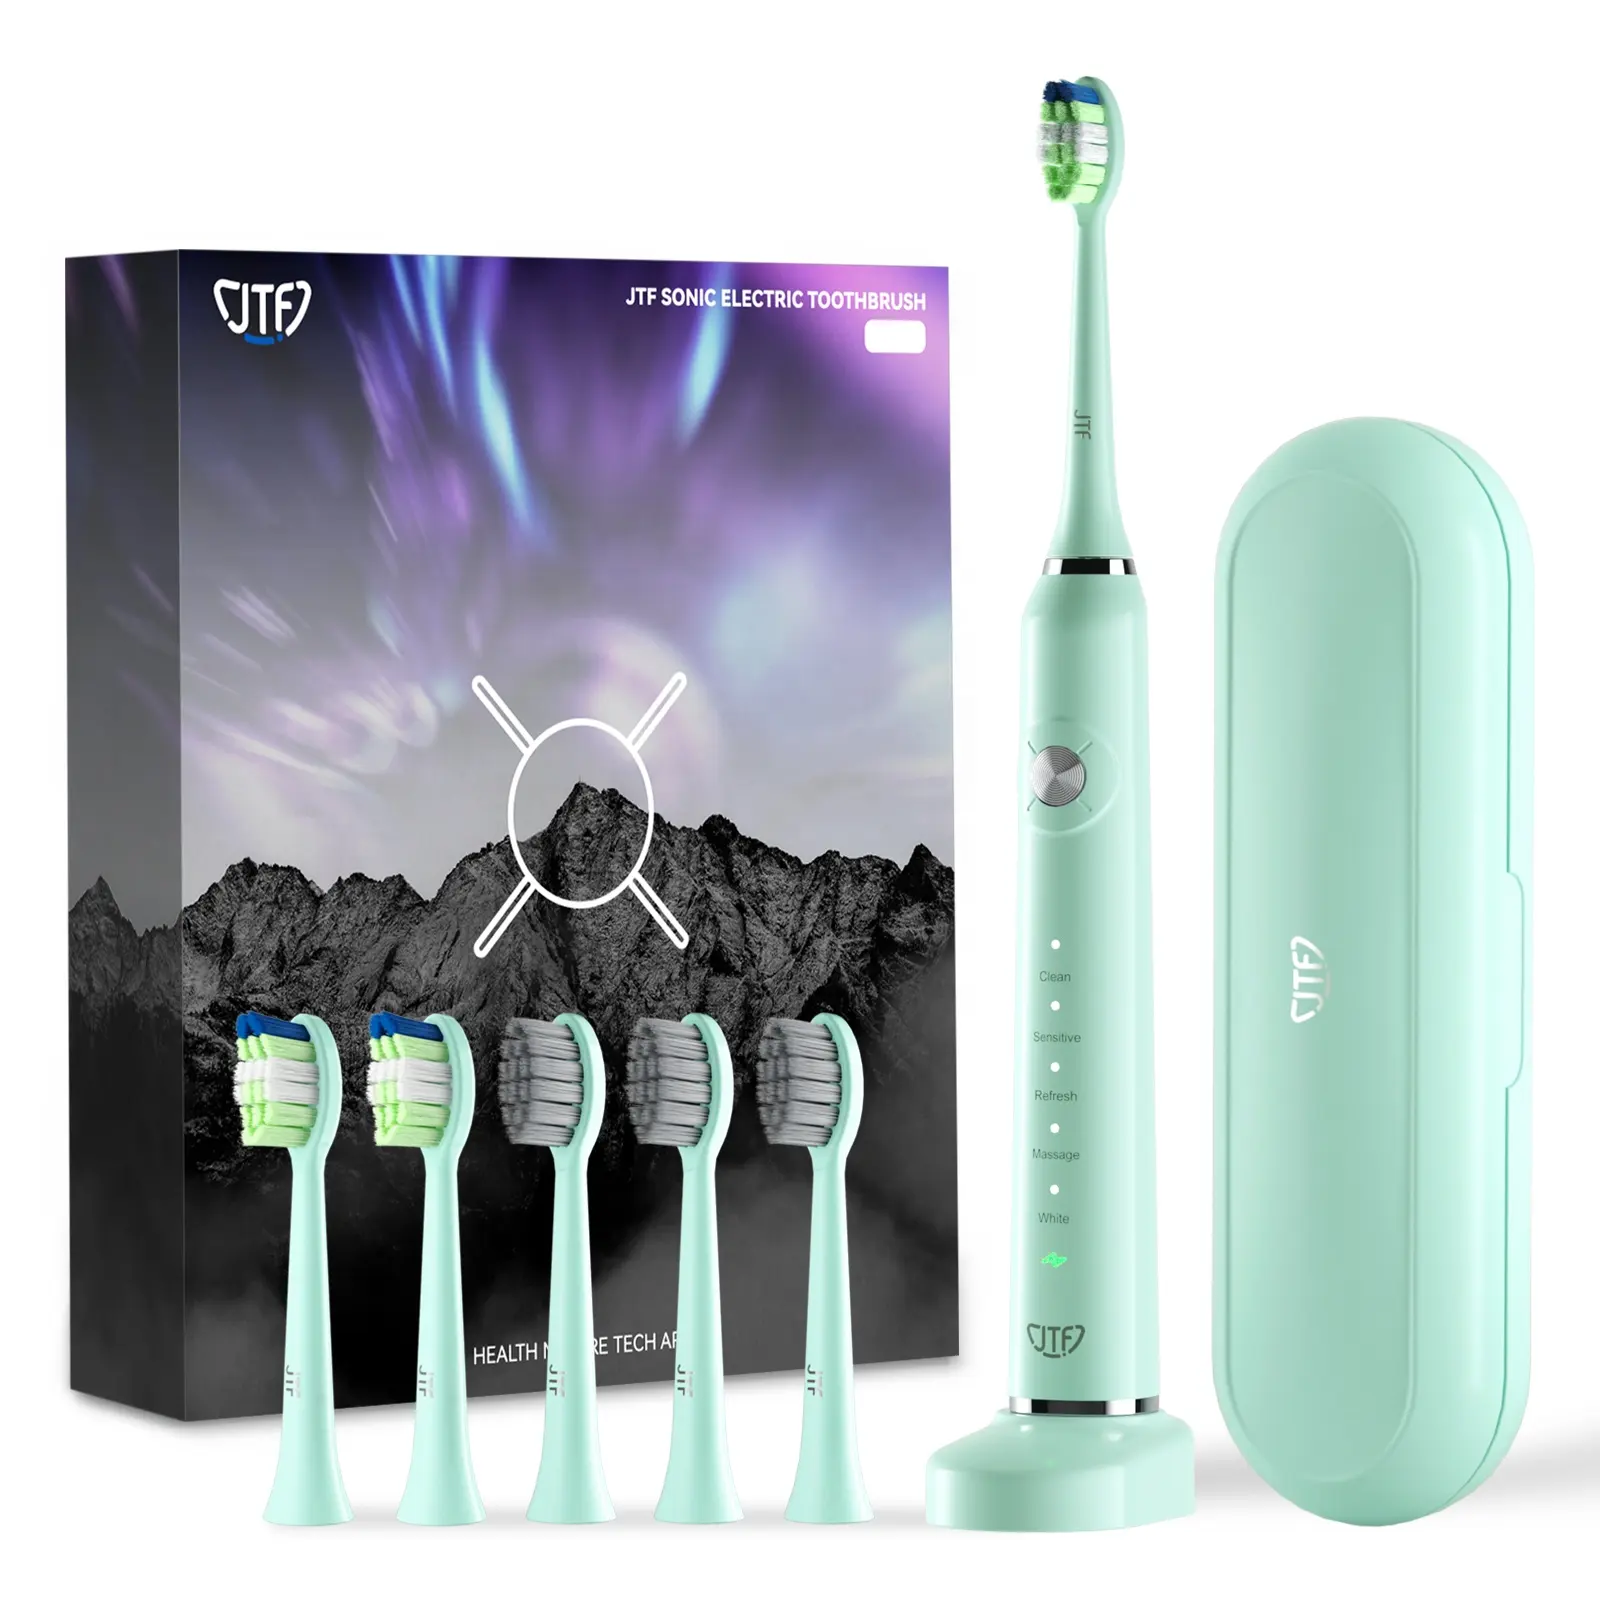 Wholesale Price IPX7 Waterproof 5100 Sonic Smart Electric Toothbrush